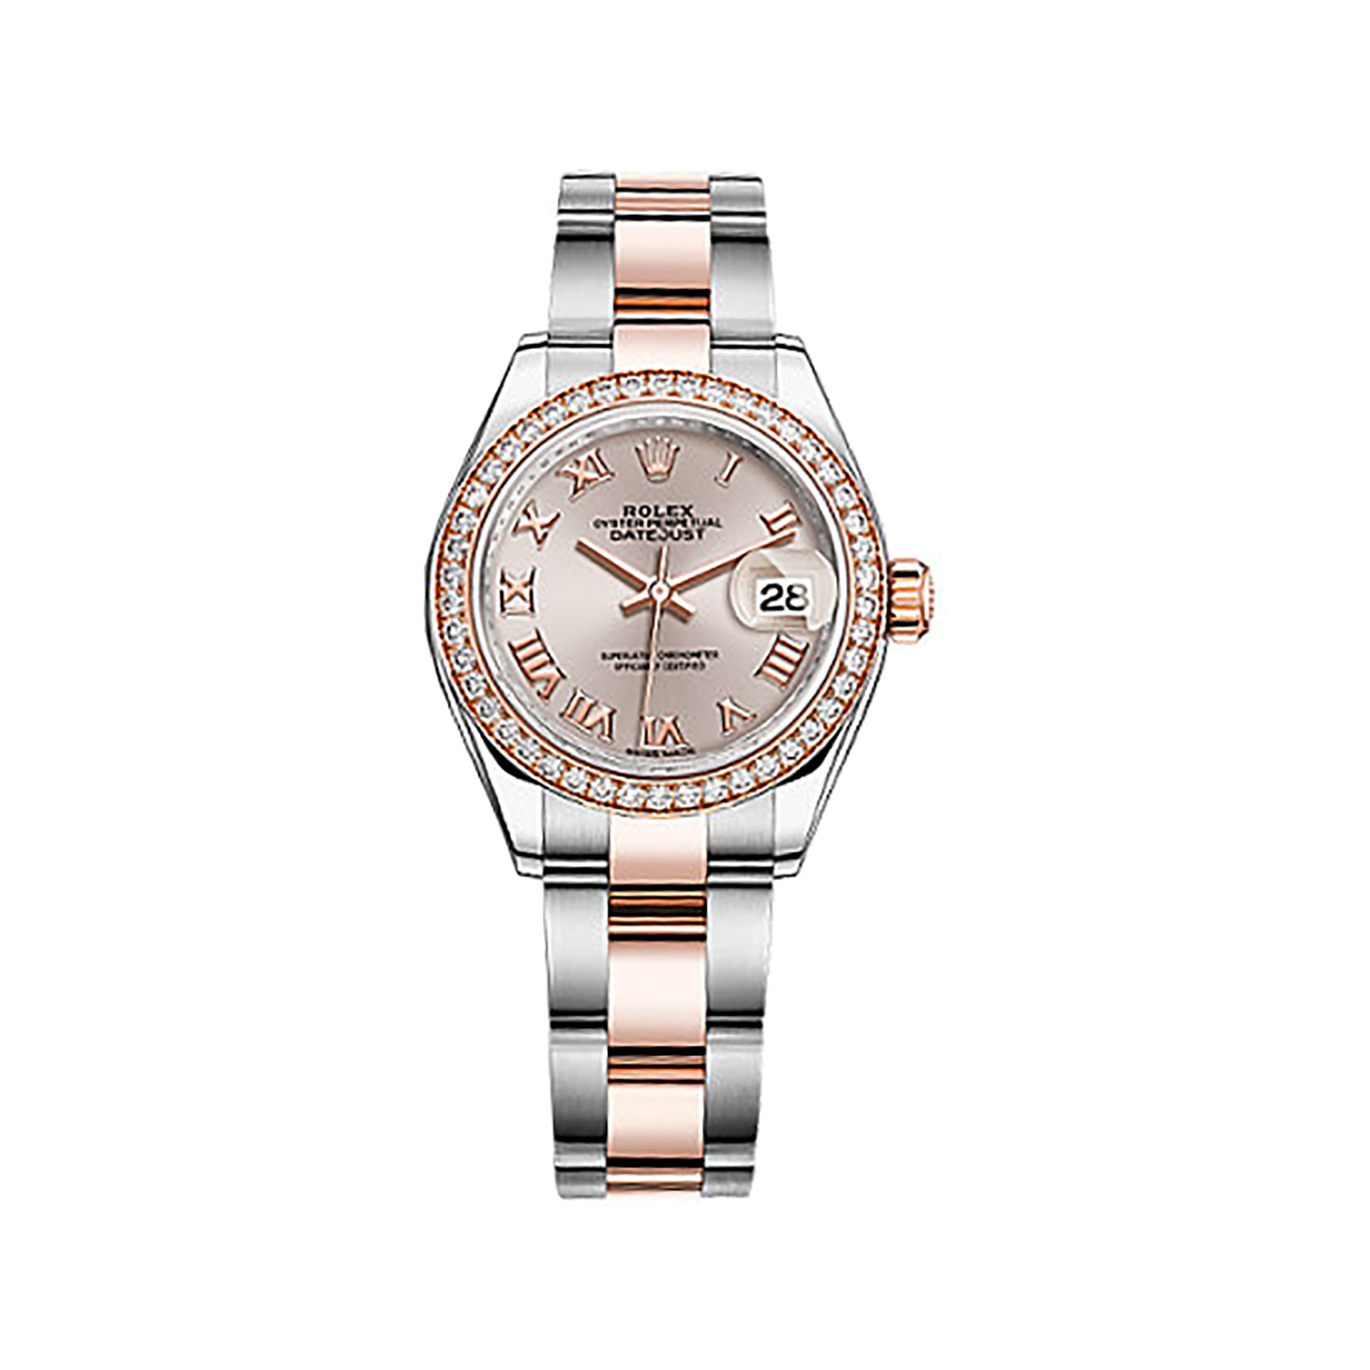 Lady-Datejust 28 279381RBR Rose Gold & Stainless Steel & Diamonds Watch (Sundust)